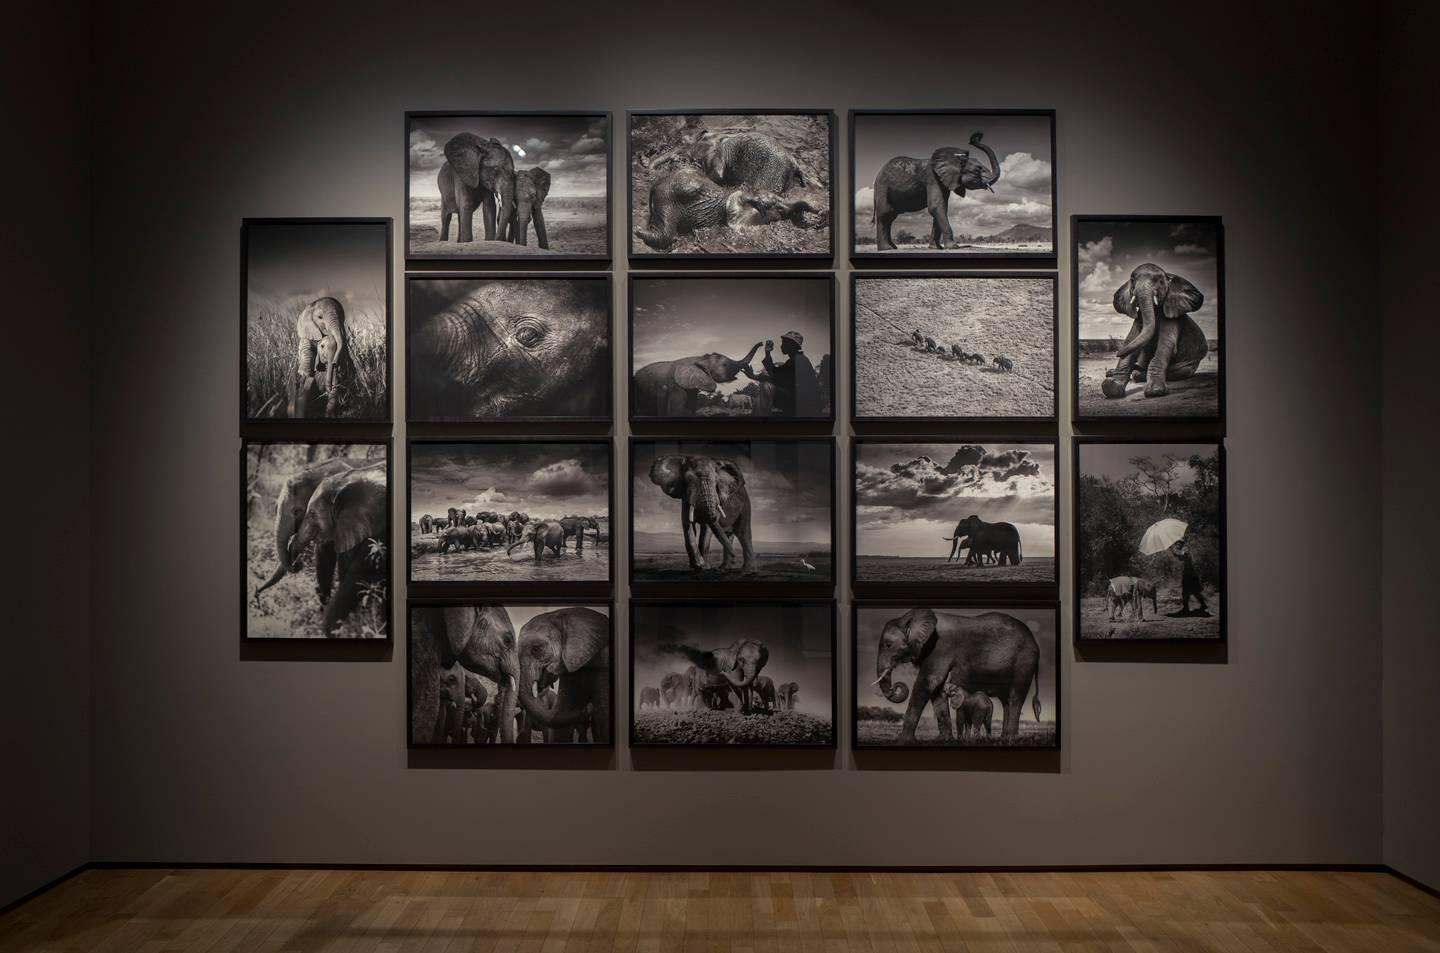 Joachim Schmeisser Landscape Photograph - Elephants in heaven, Kenya, 21st century, contemporary, wildlife, Fine Art Print